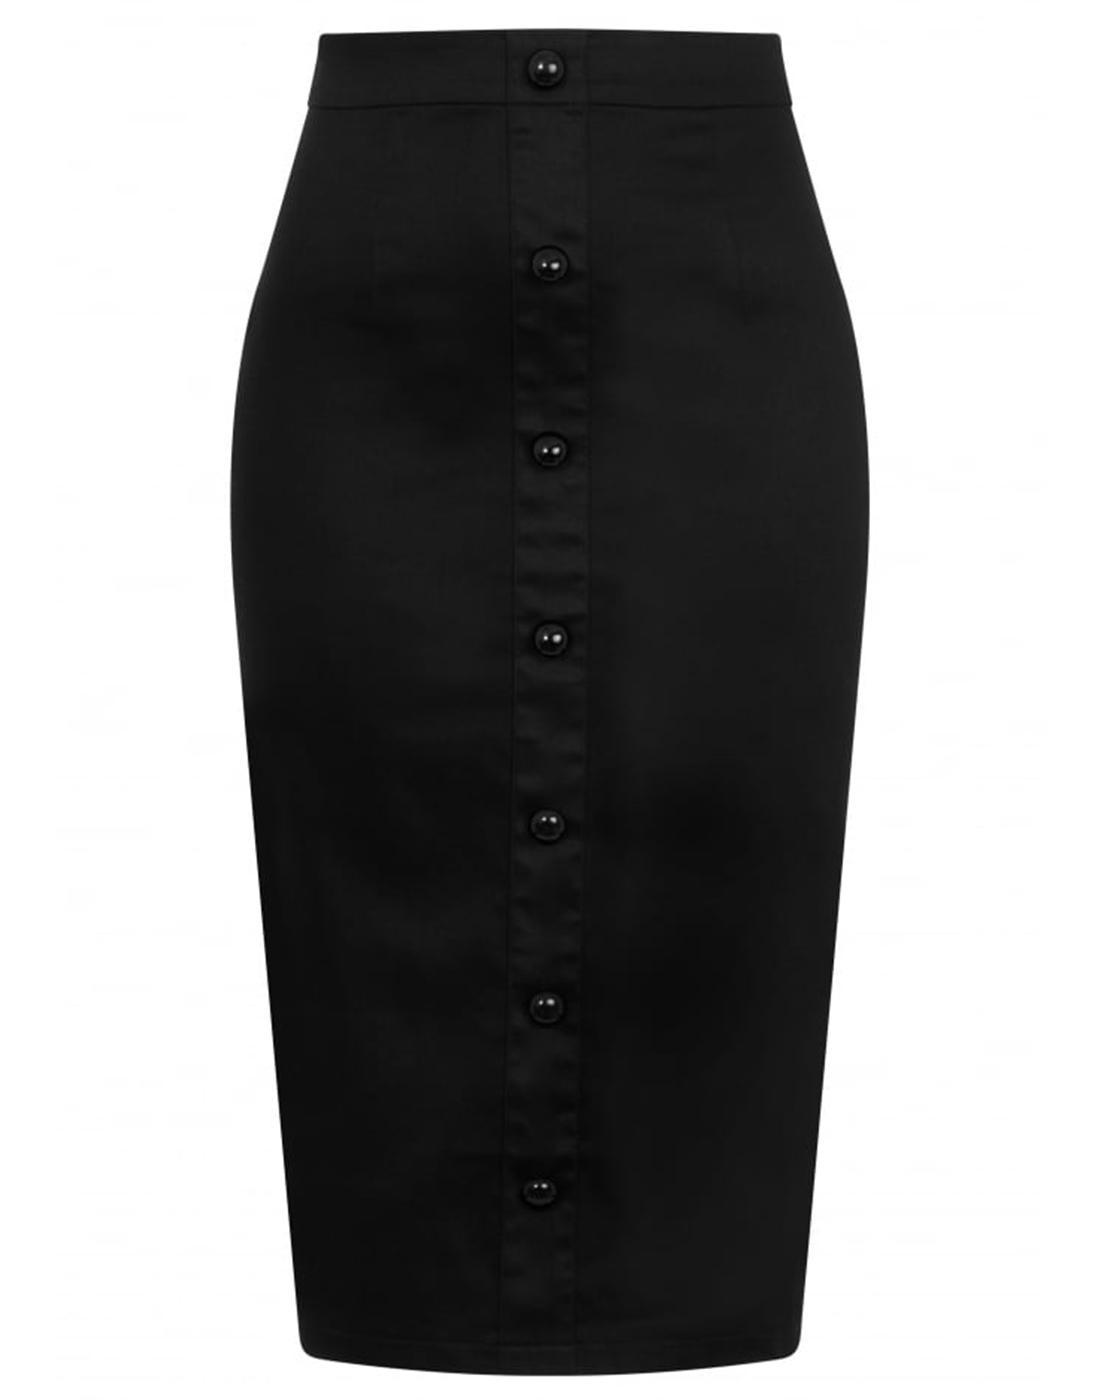 Bettina COLLECTIF Retro Vintage Black Pencil Skirt